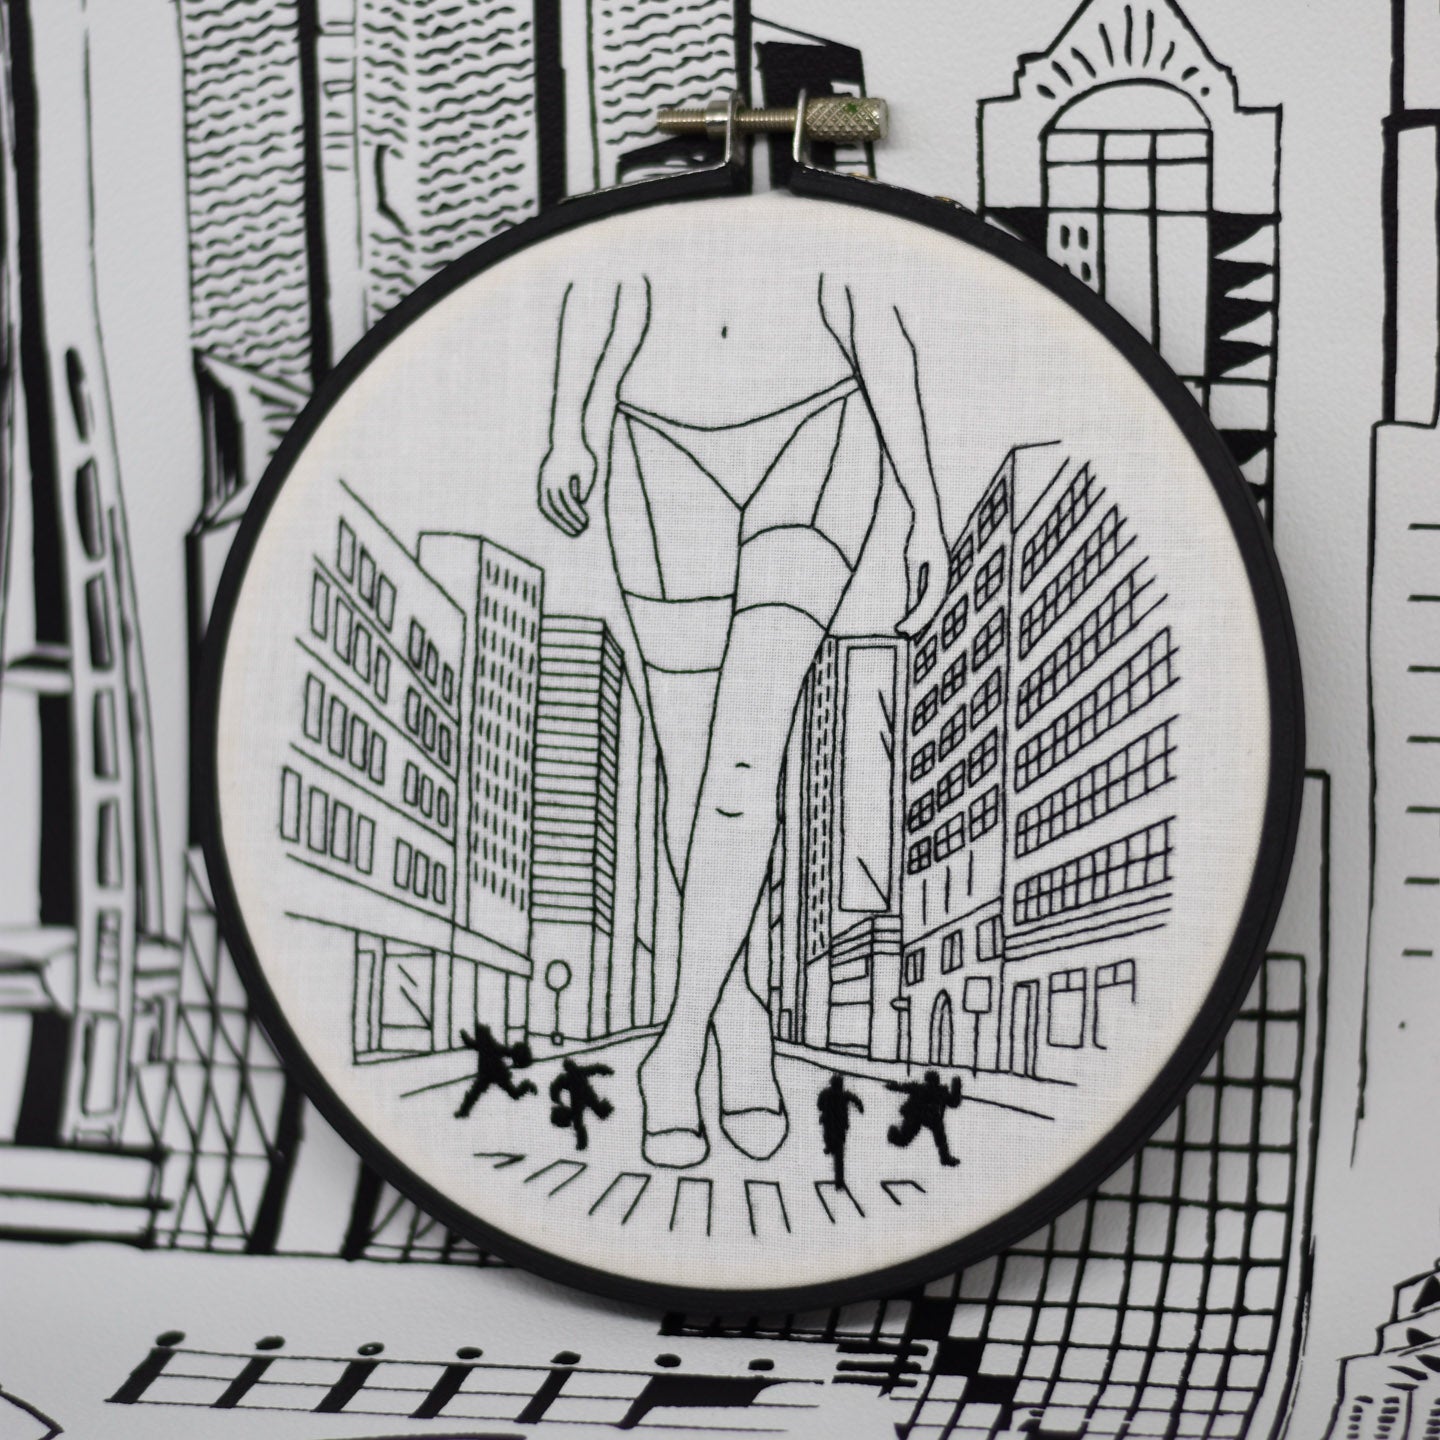 Big City Girl Digital Embroidery Pattern